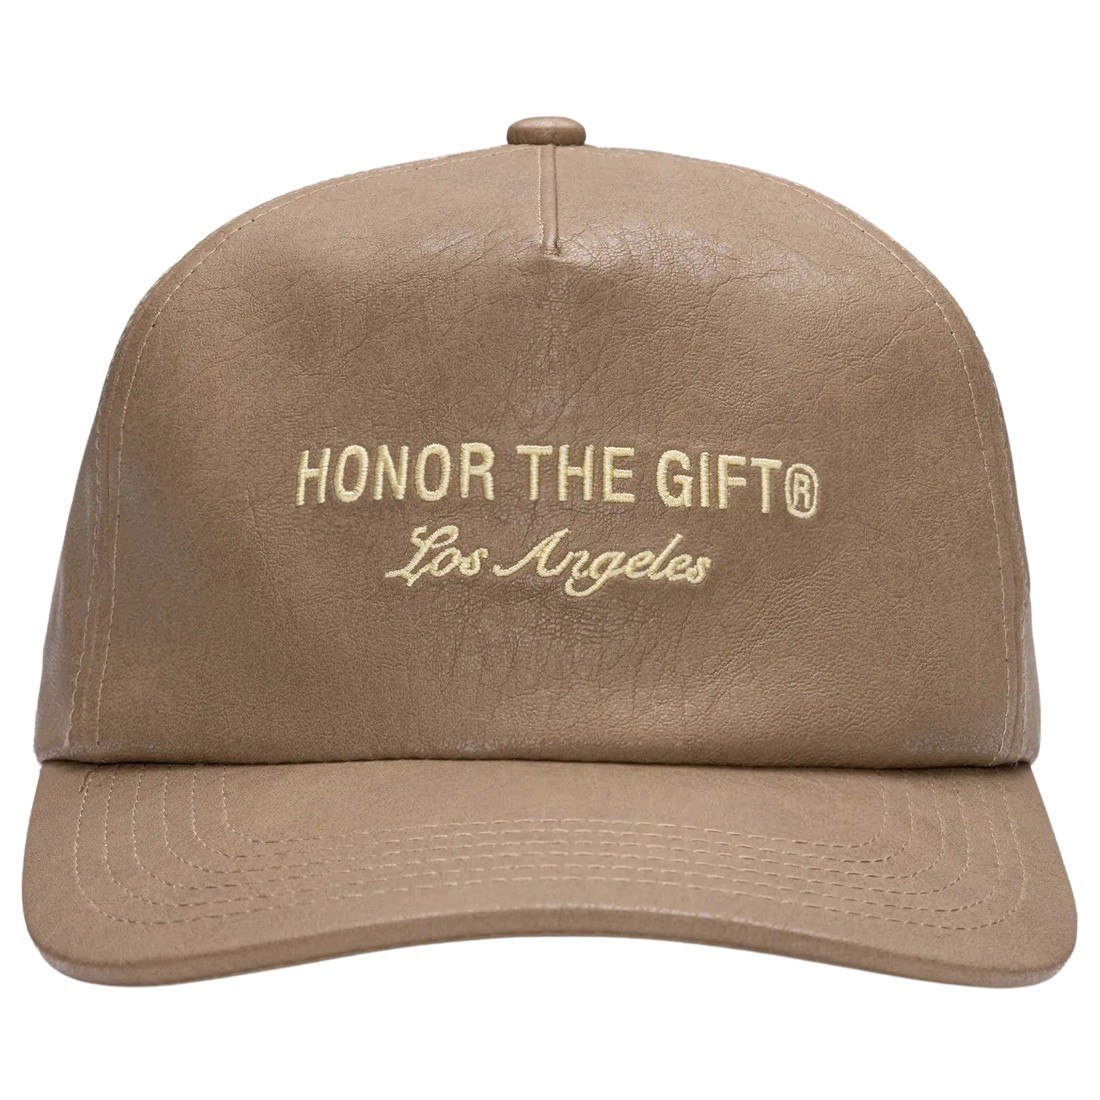 Honor The Gift Los Angeles Cap (brown / tan)